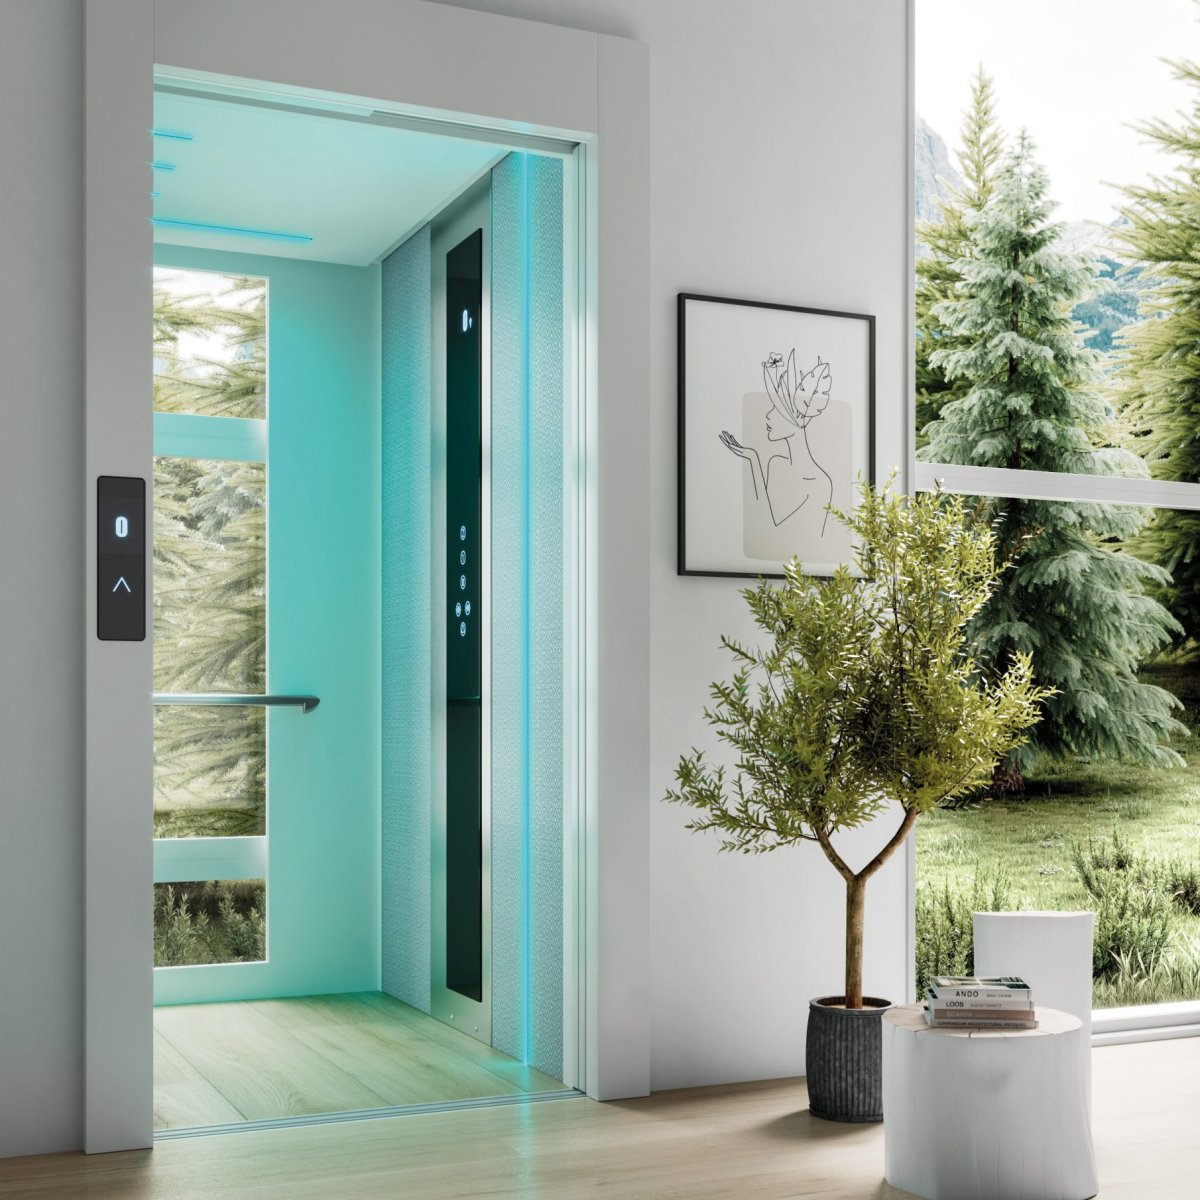  The Elite Home Lift | Simplex Elevators Gallery Image 10